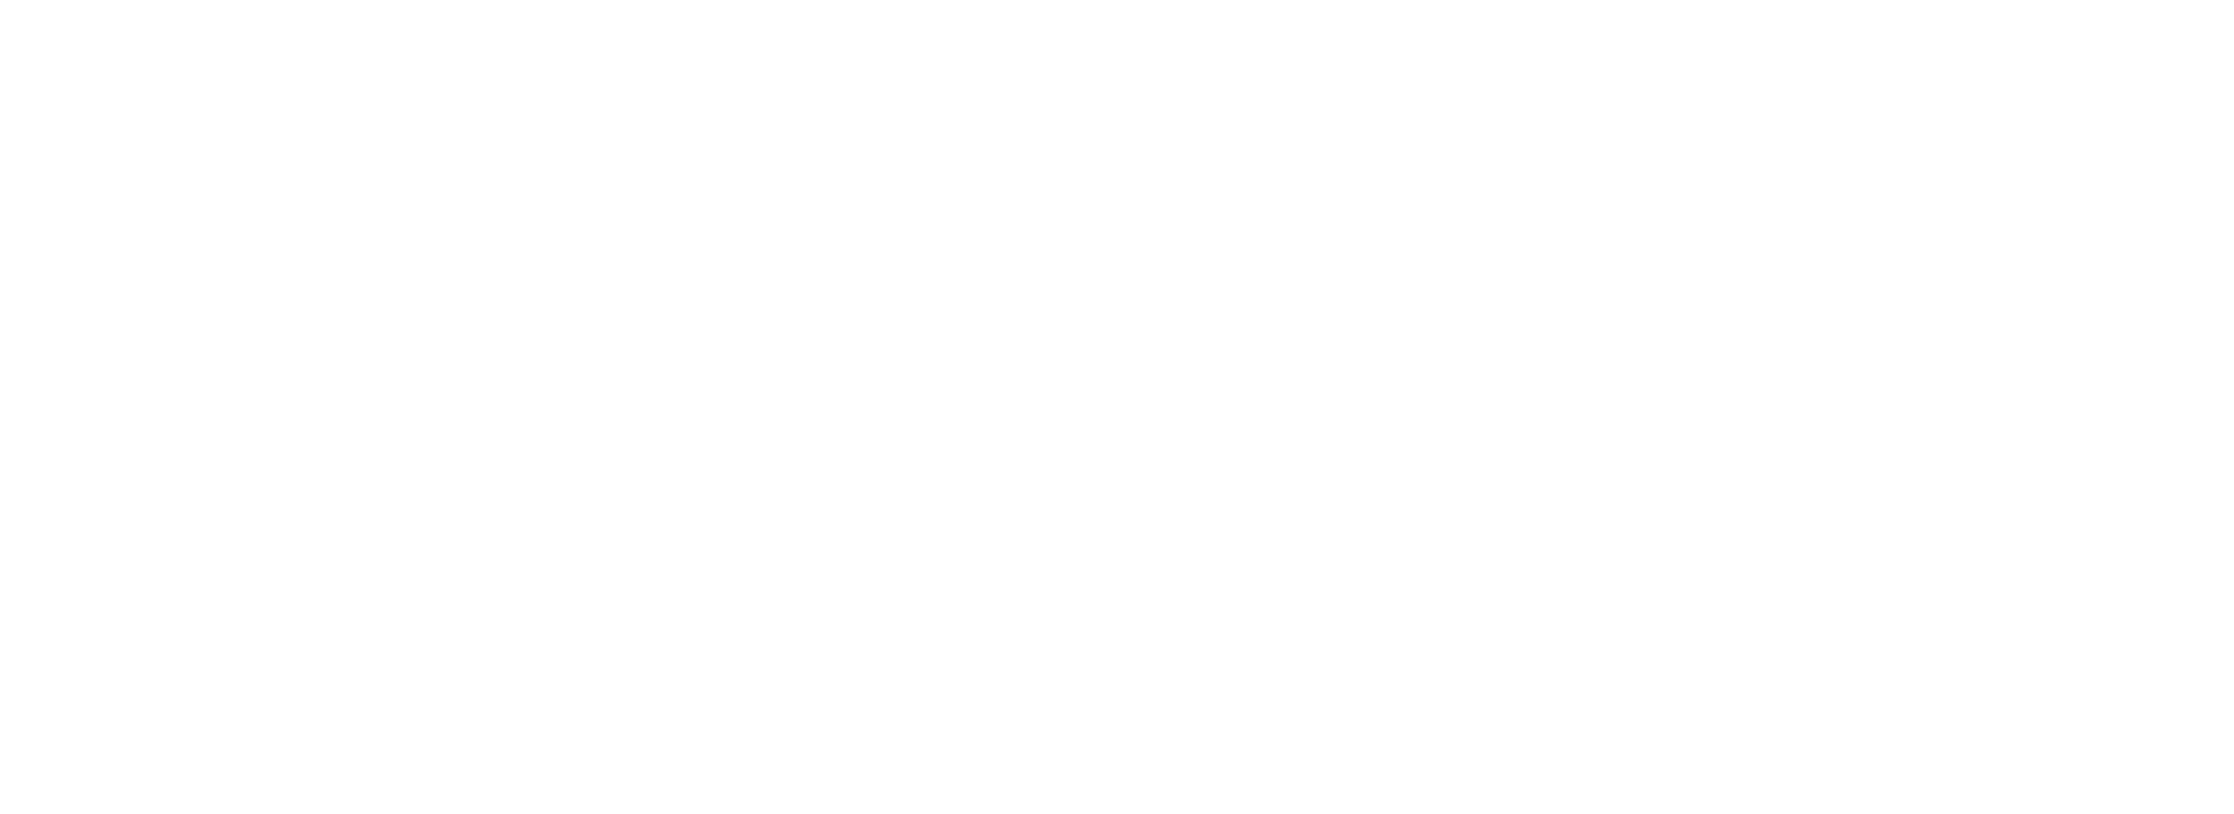 Celler Cooperatiu de Cornudella de Montsant